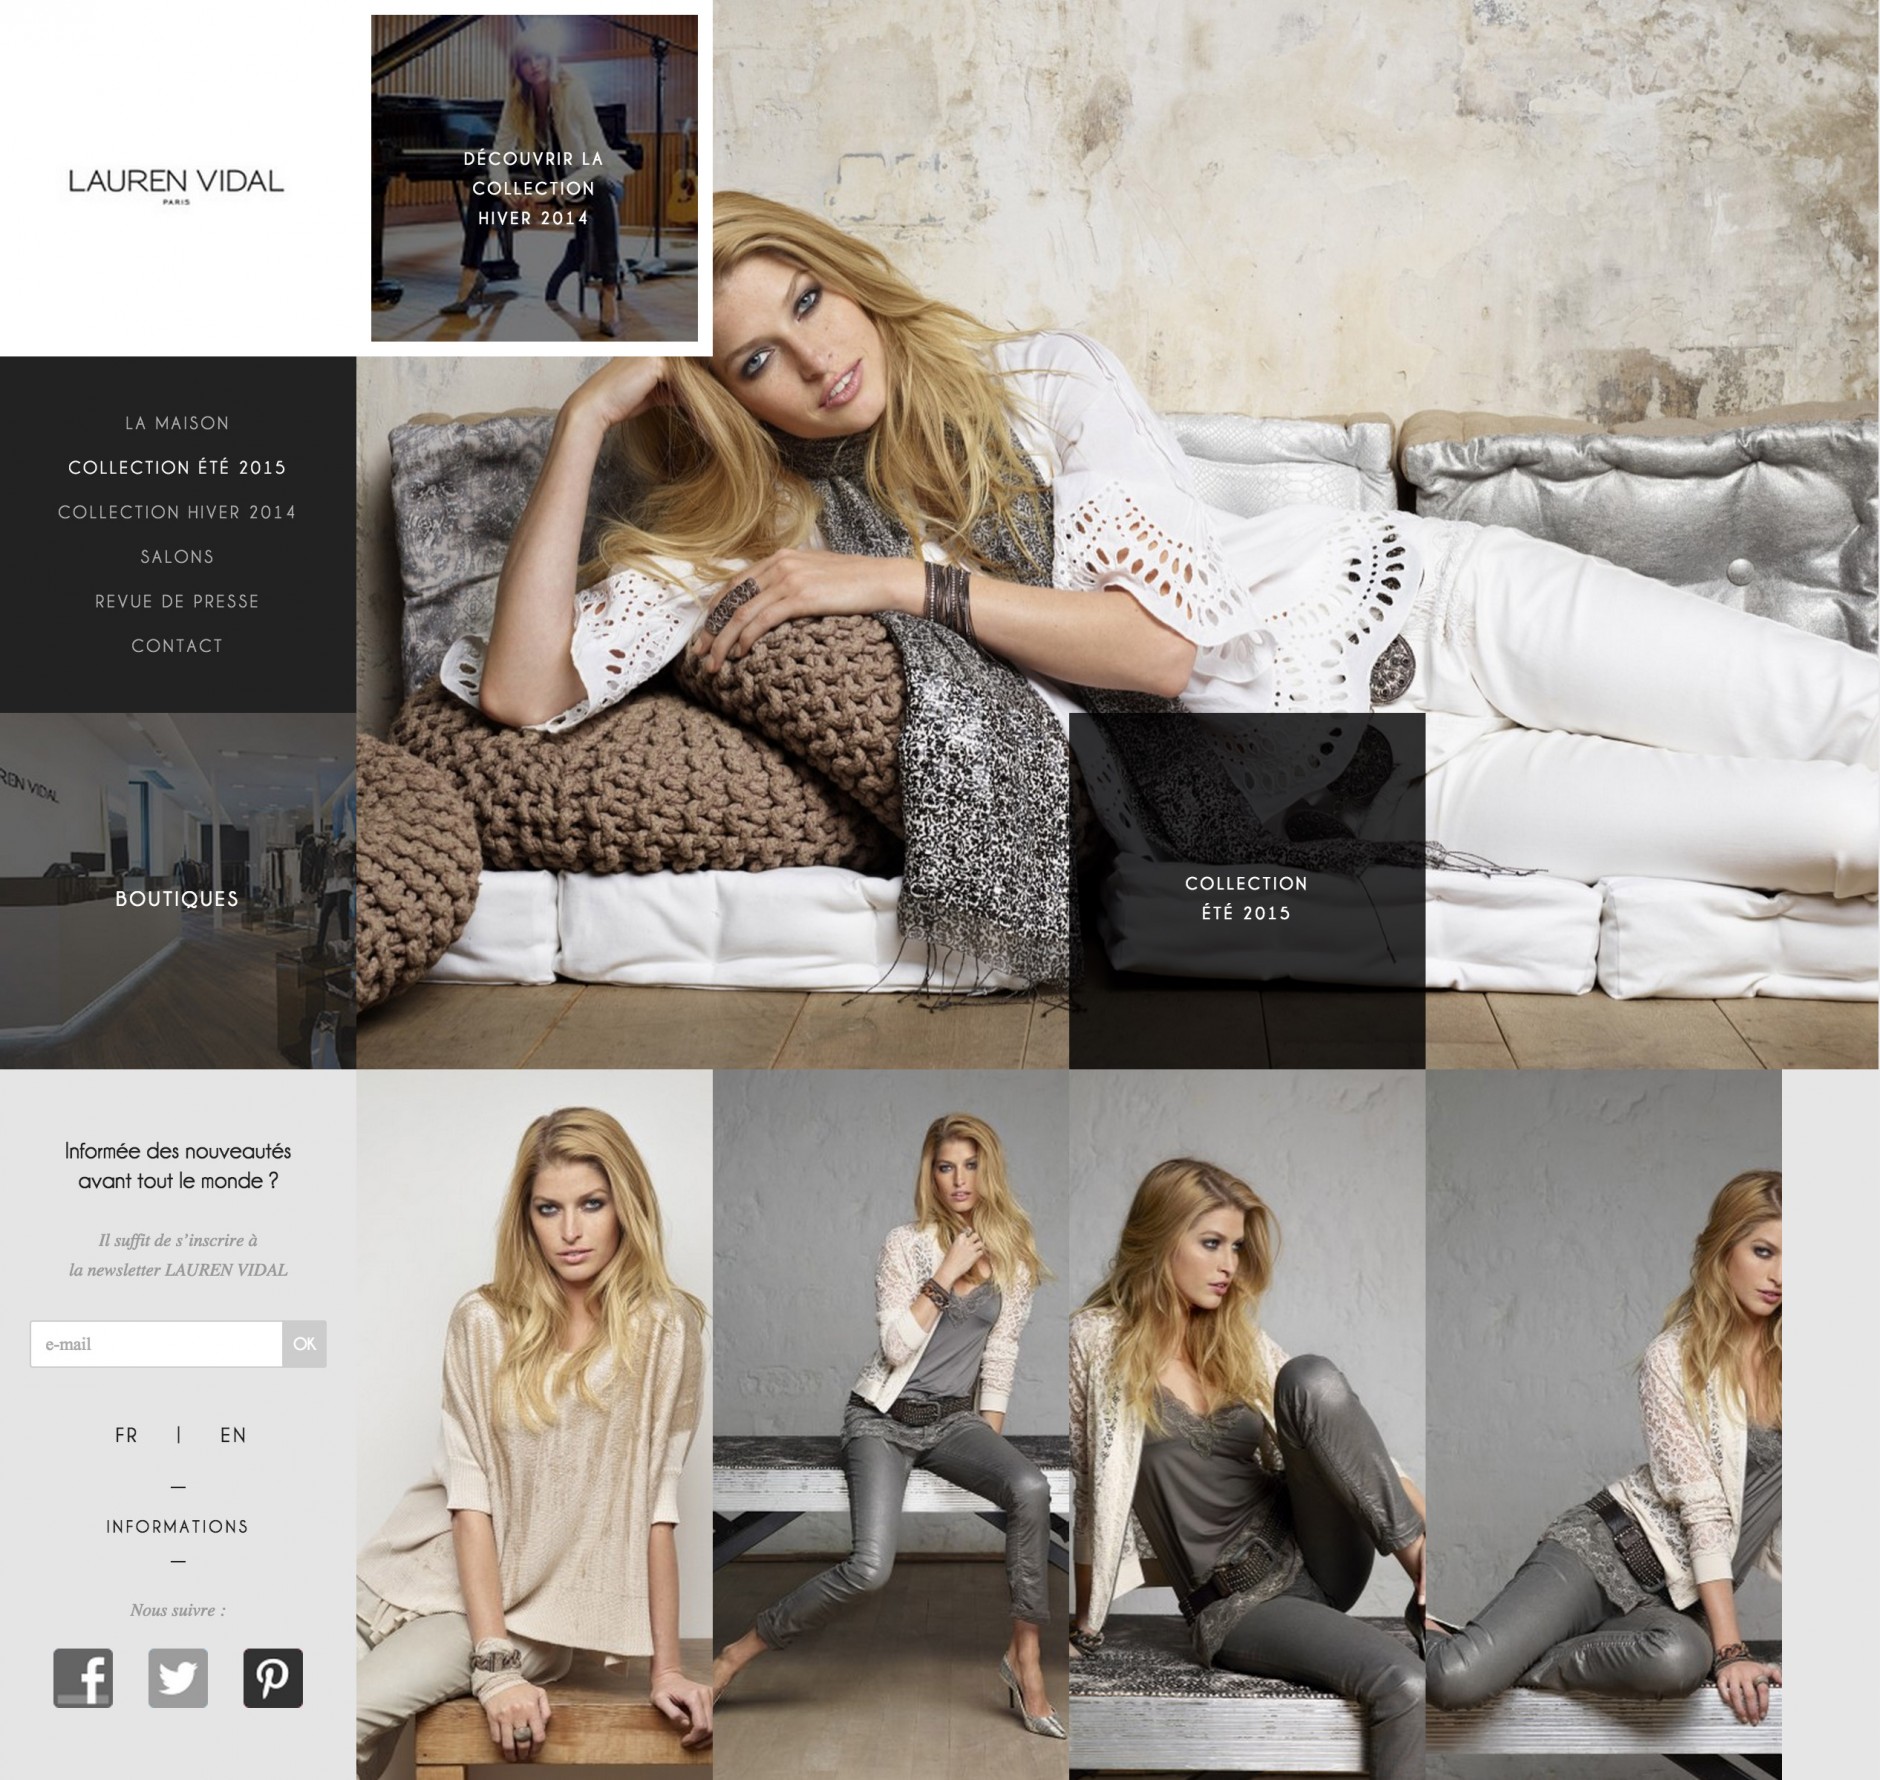 LAUREN VIDAL webdesign responsive, fashion mode site vitrine photographie - mael burgy